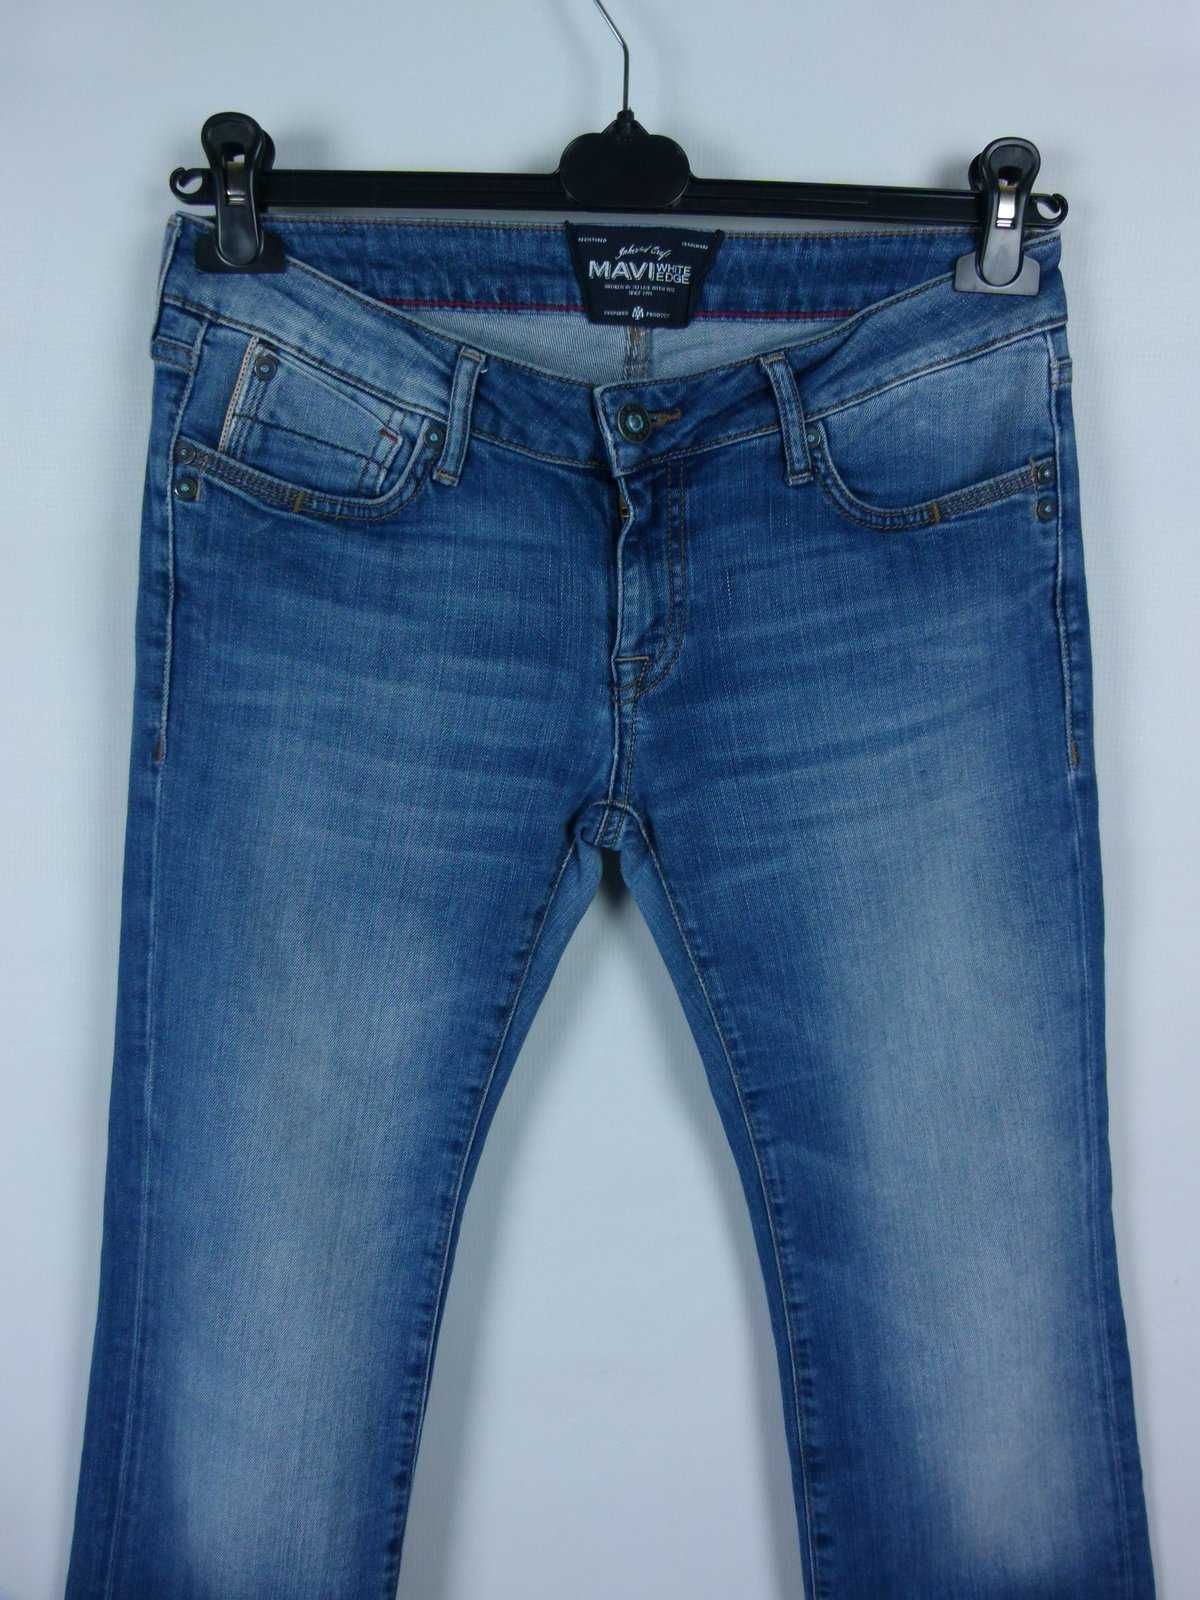 MAVI spodnie jeans proste nogawki 30 / 32